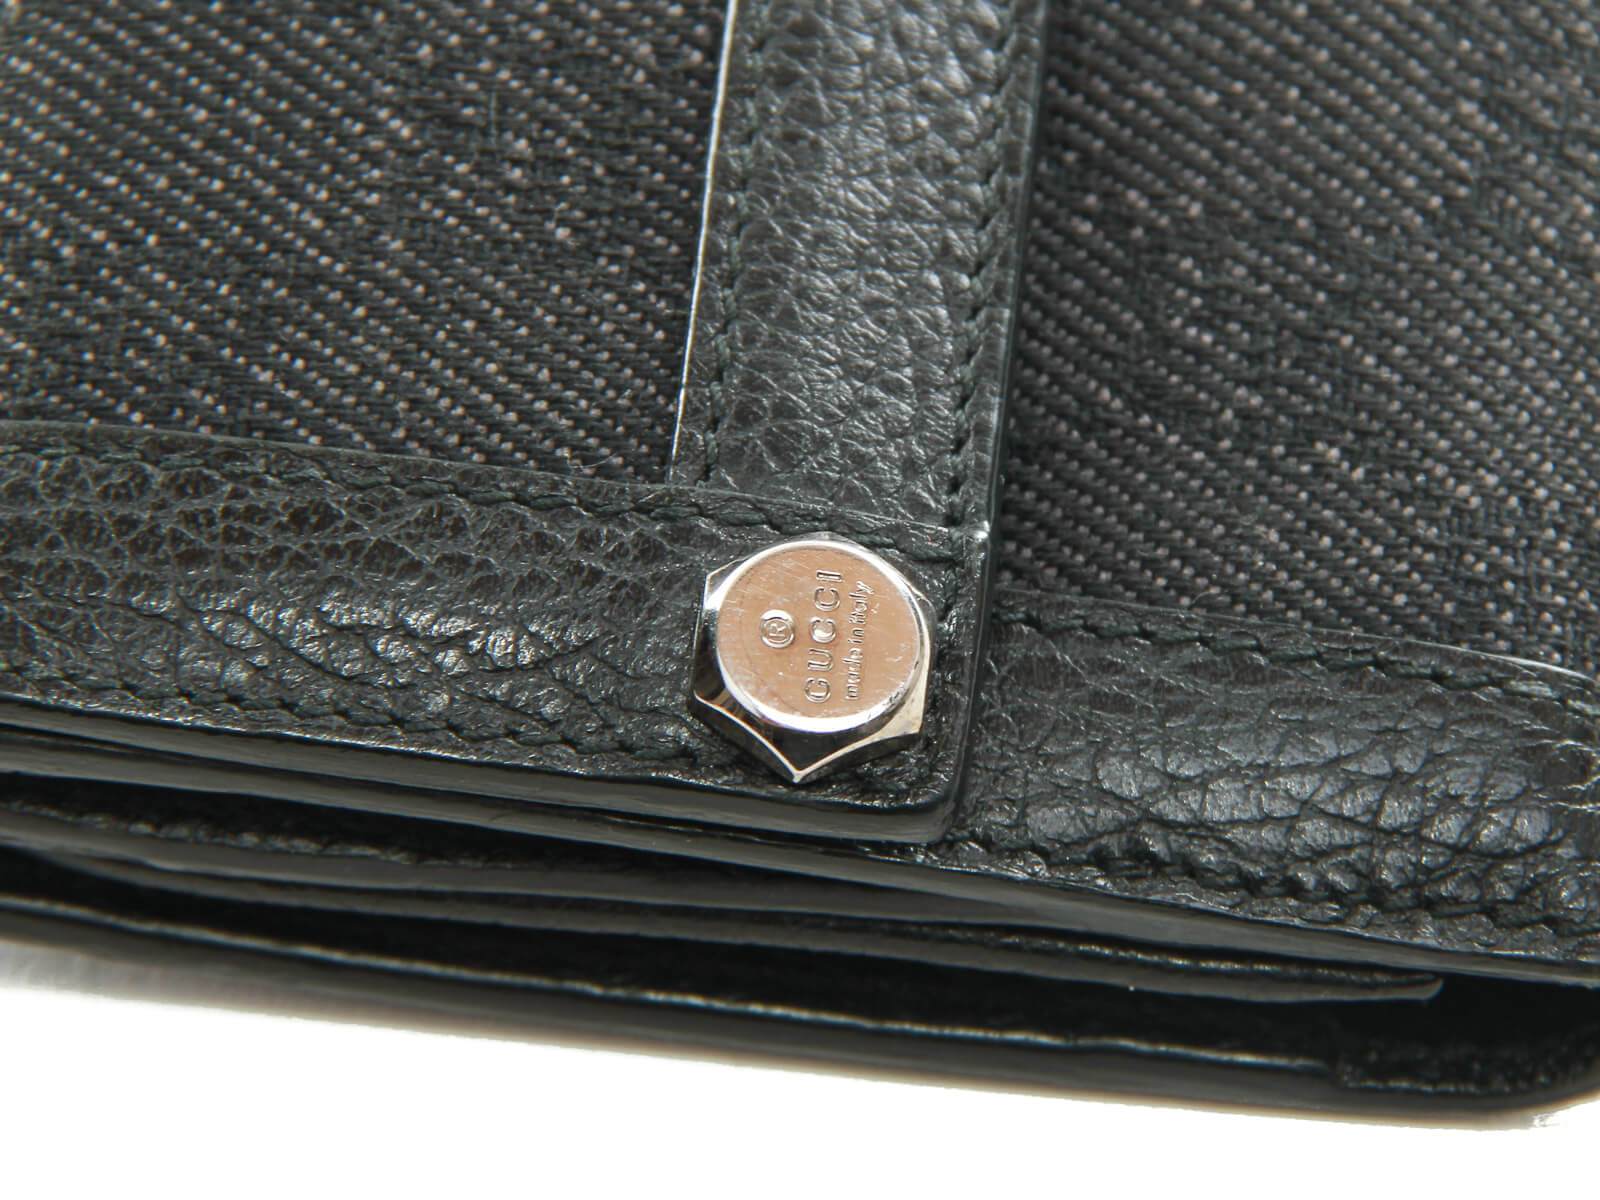 Gucci Authenticated Denim Wallet